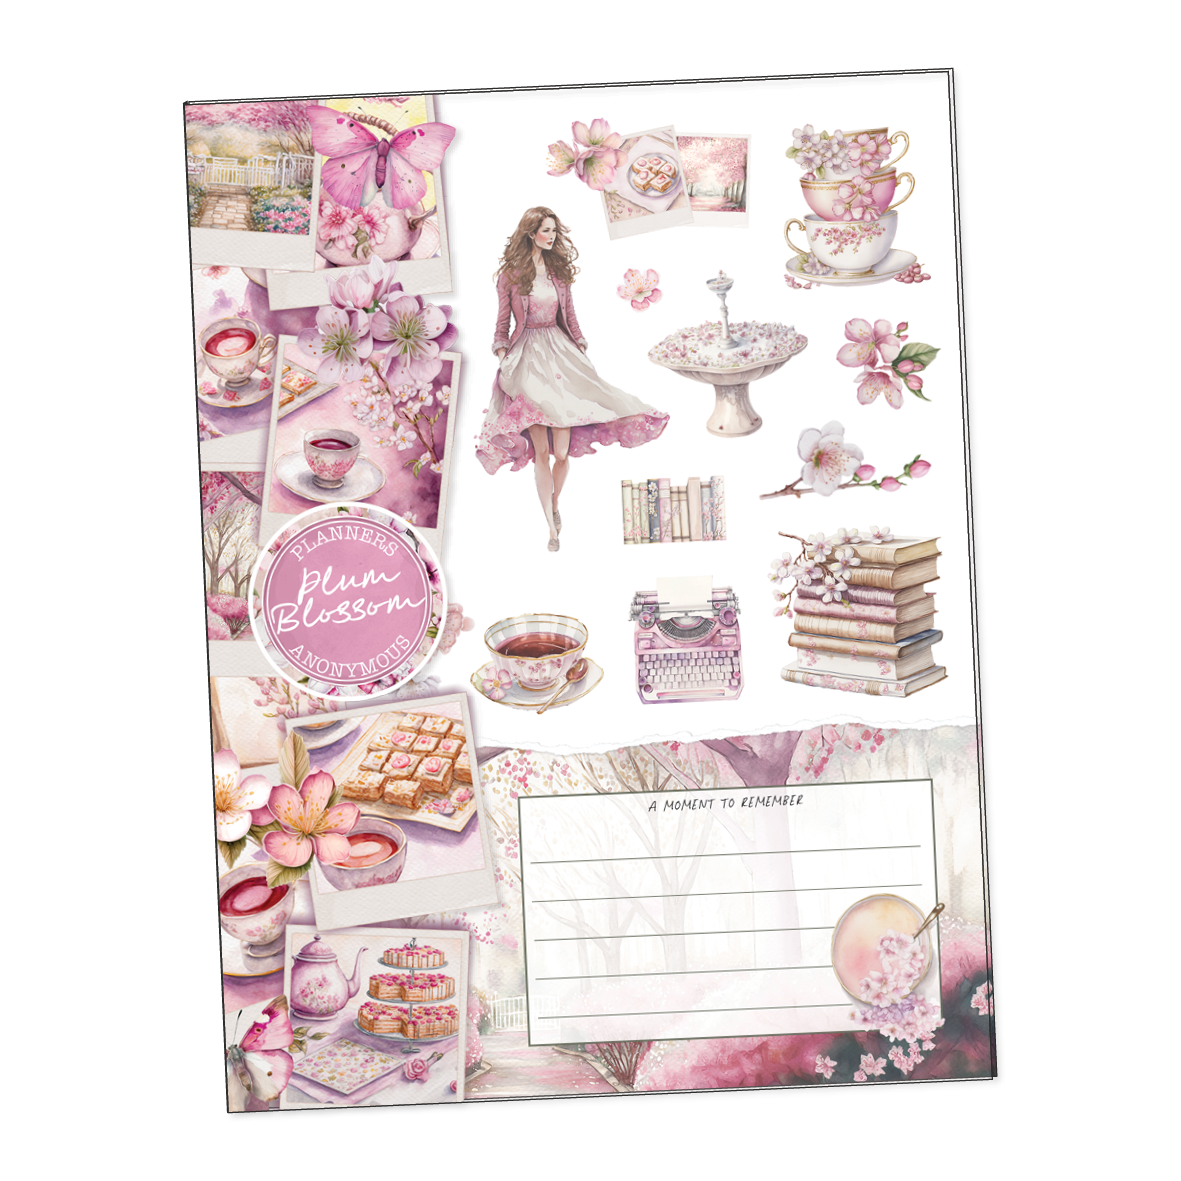 Plum Blossom planner sticker book